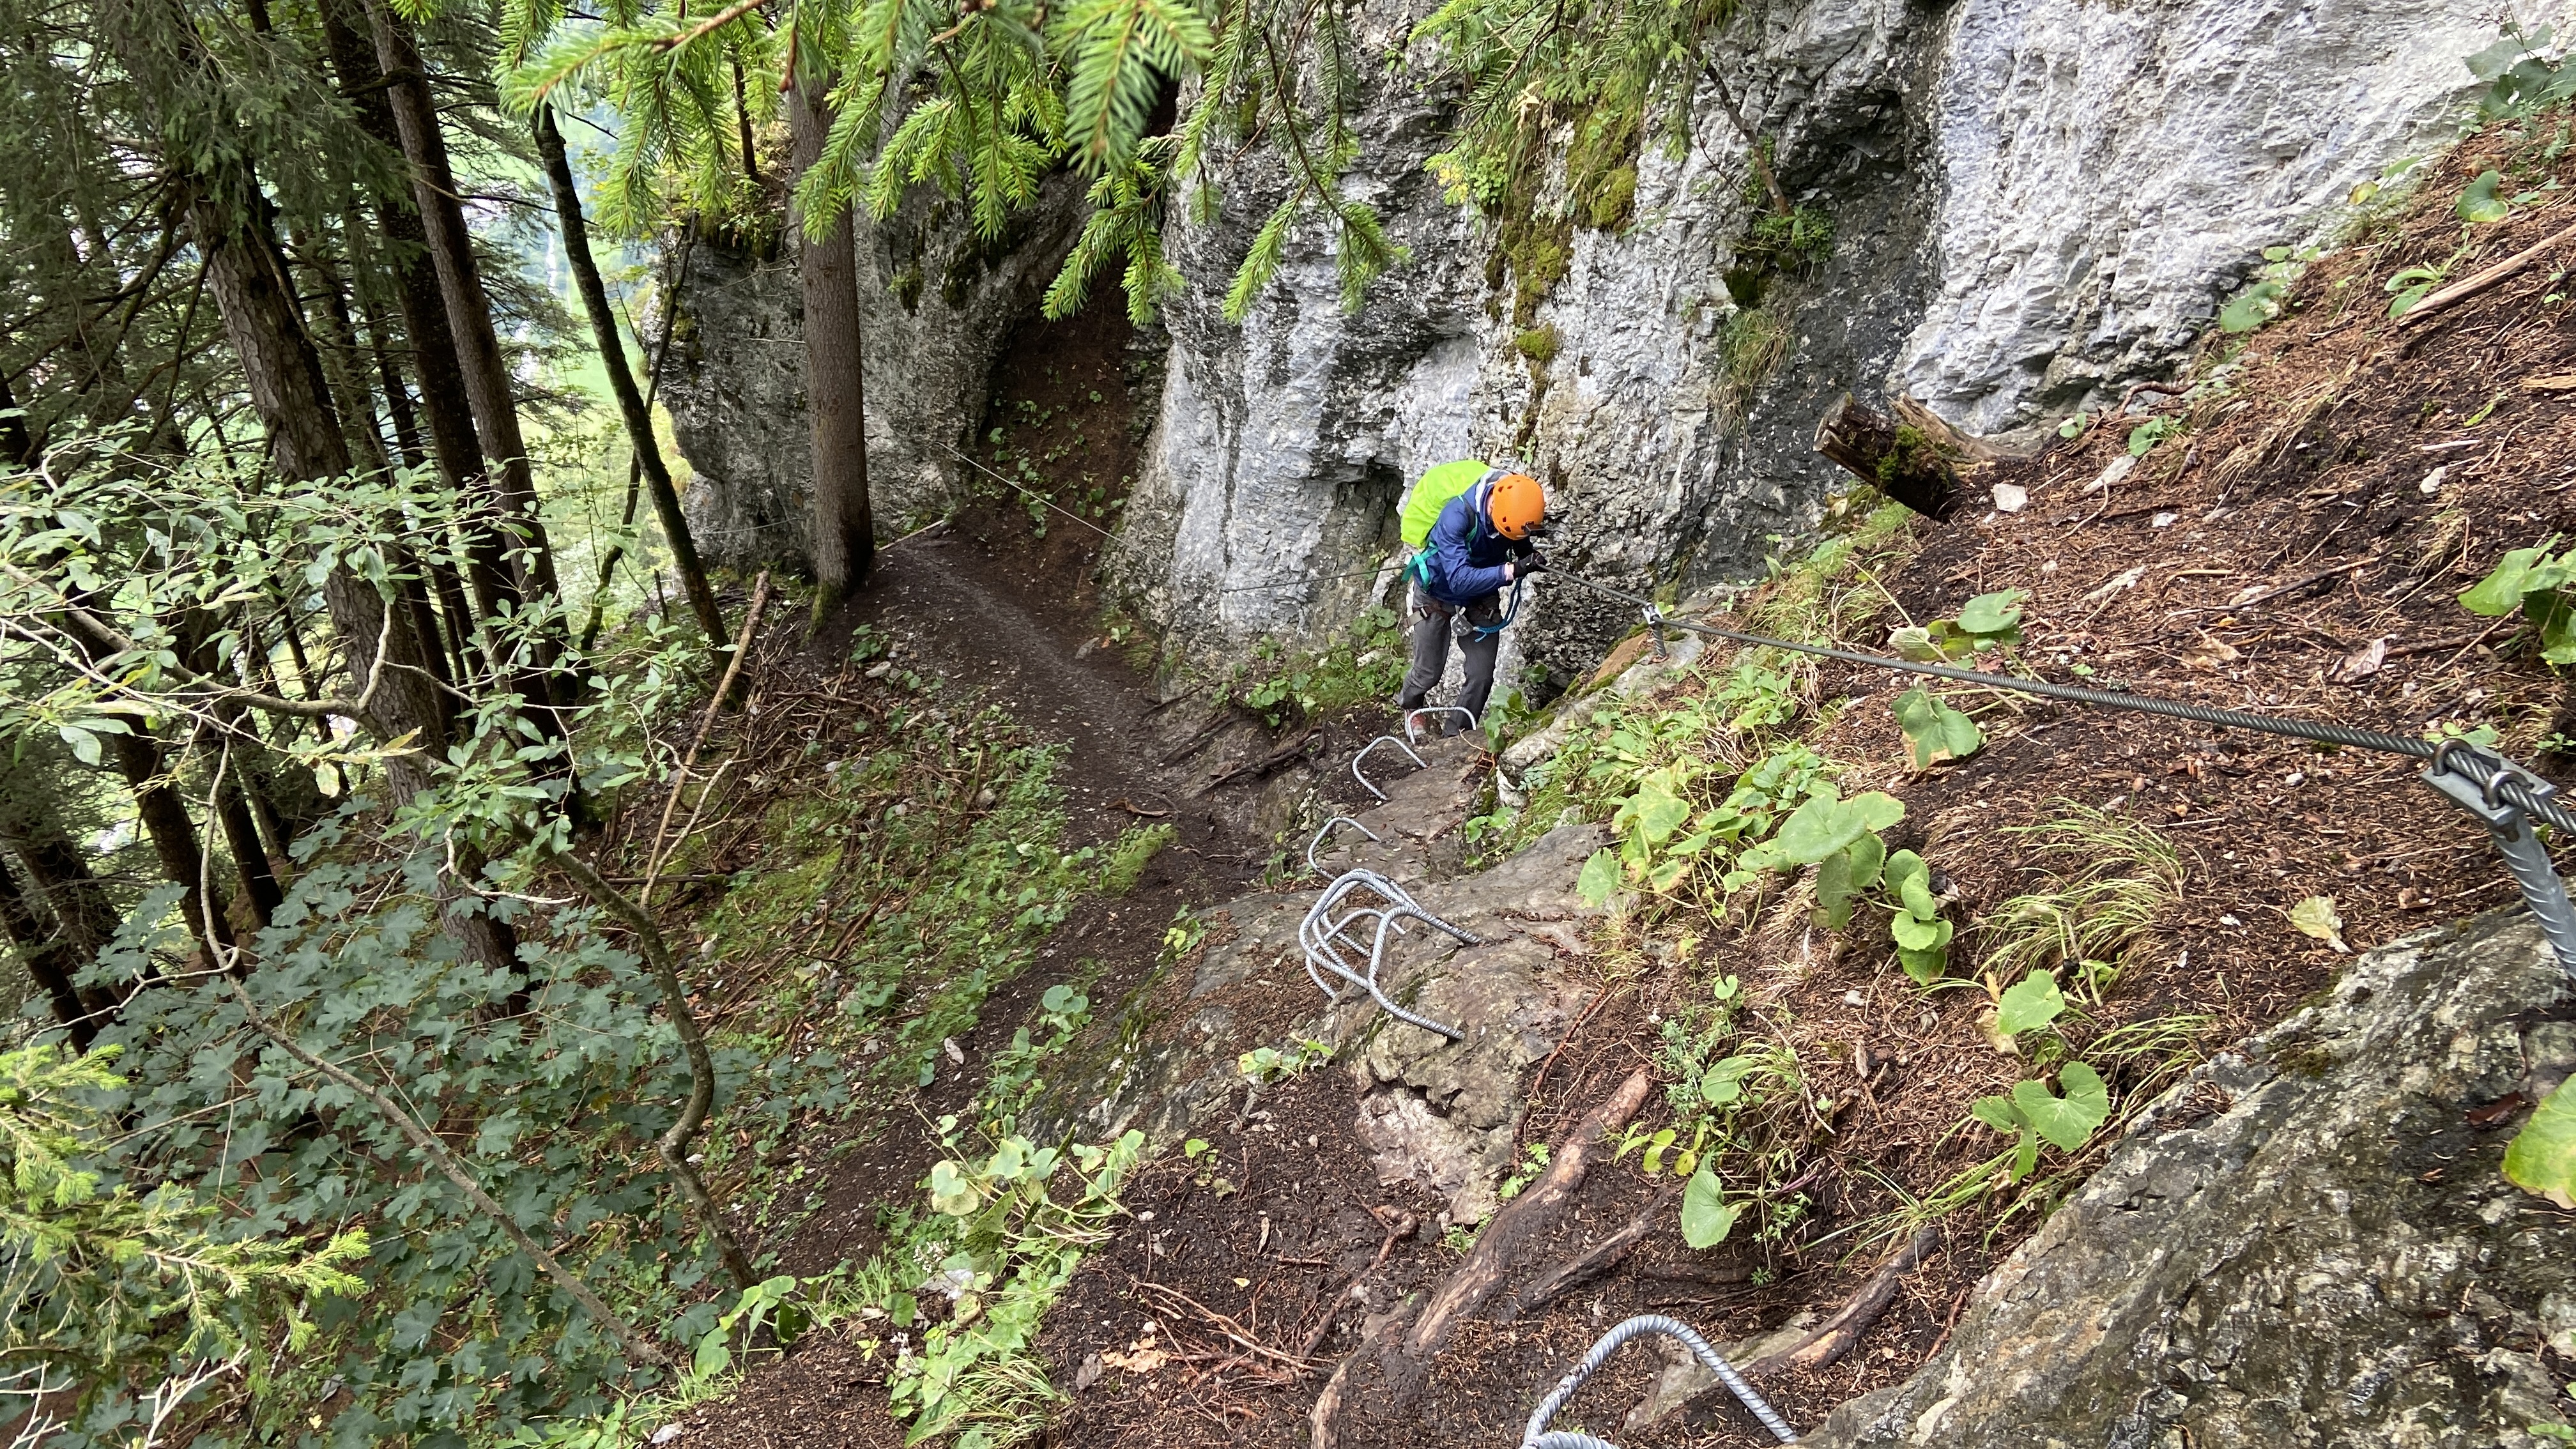 Brett climbing down metal runs in the forest on the via ferrata murren switzerland